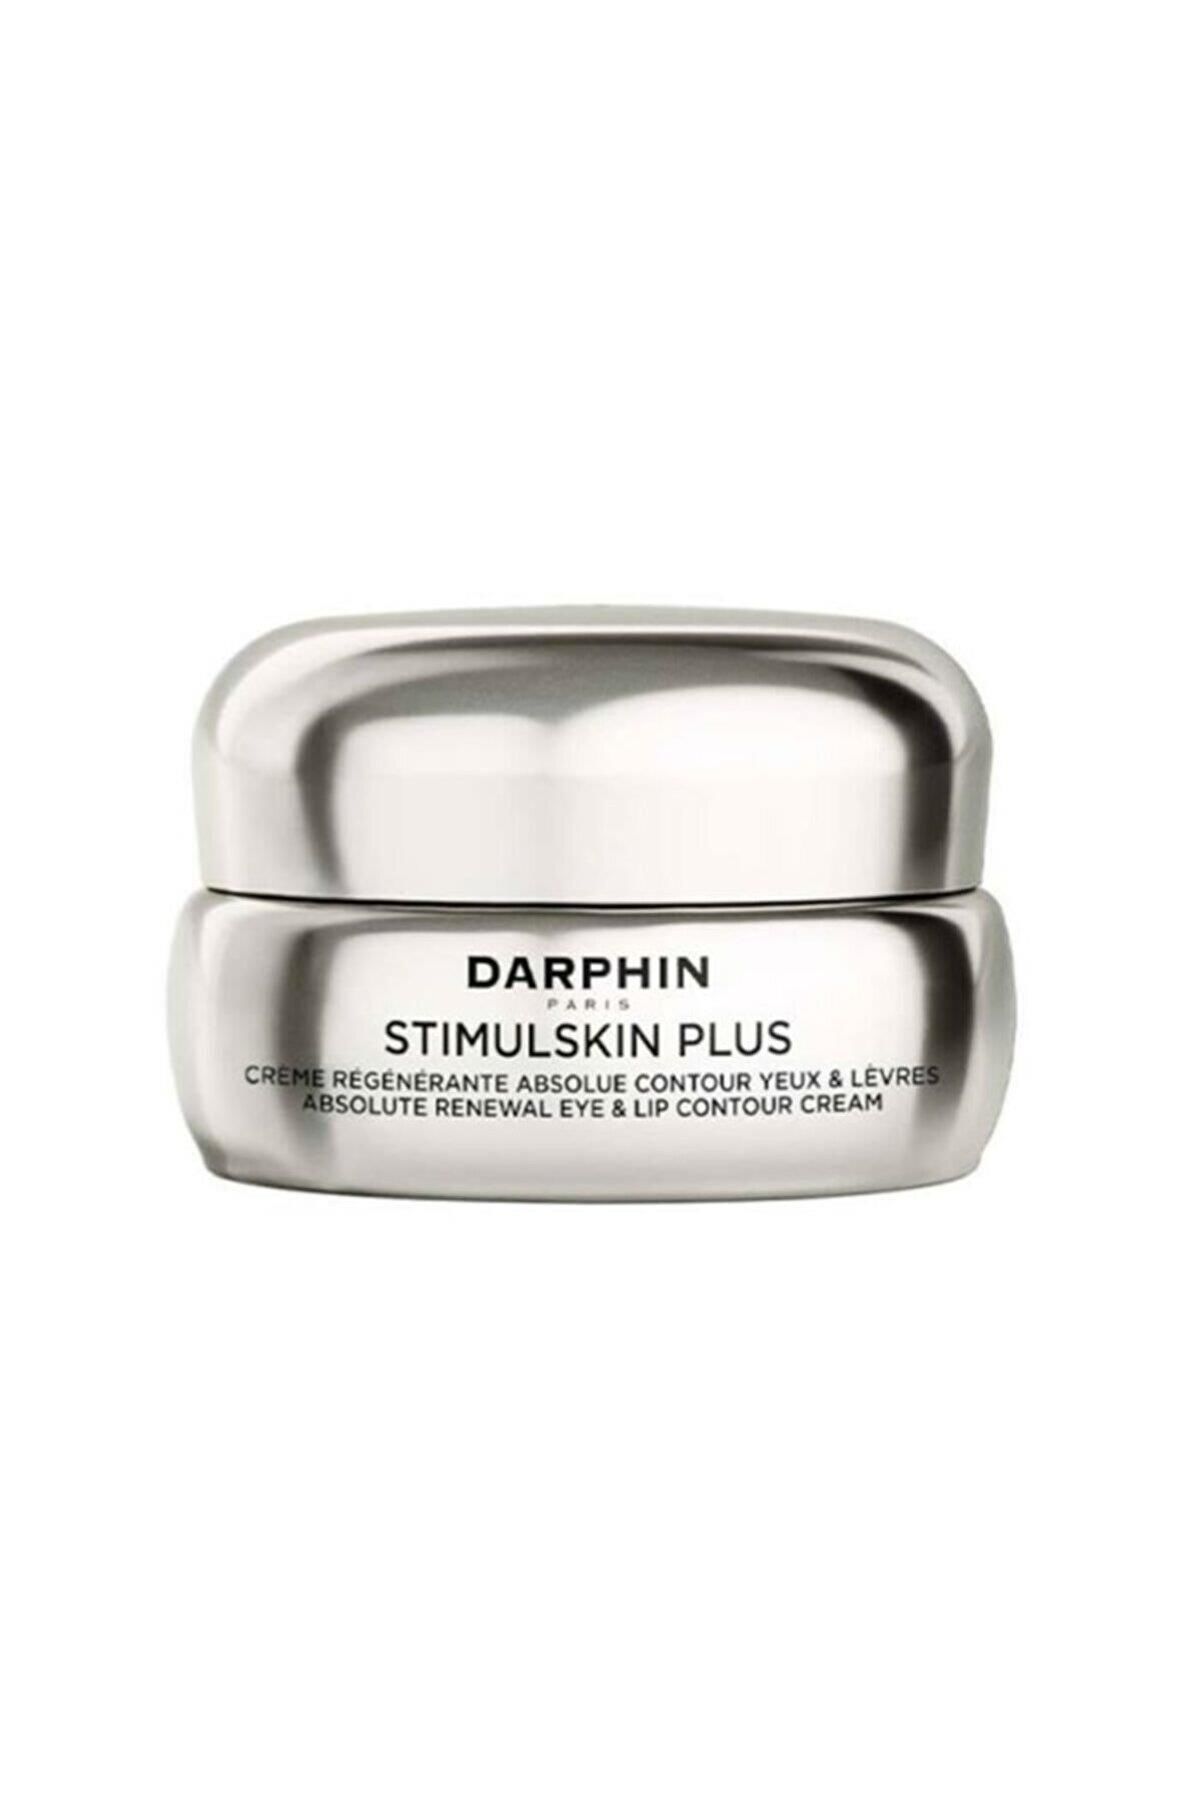 Darphin Stimulskin Plus Absolute Renewal Eye and Lip Contour Cream 15 ml